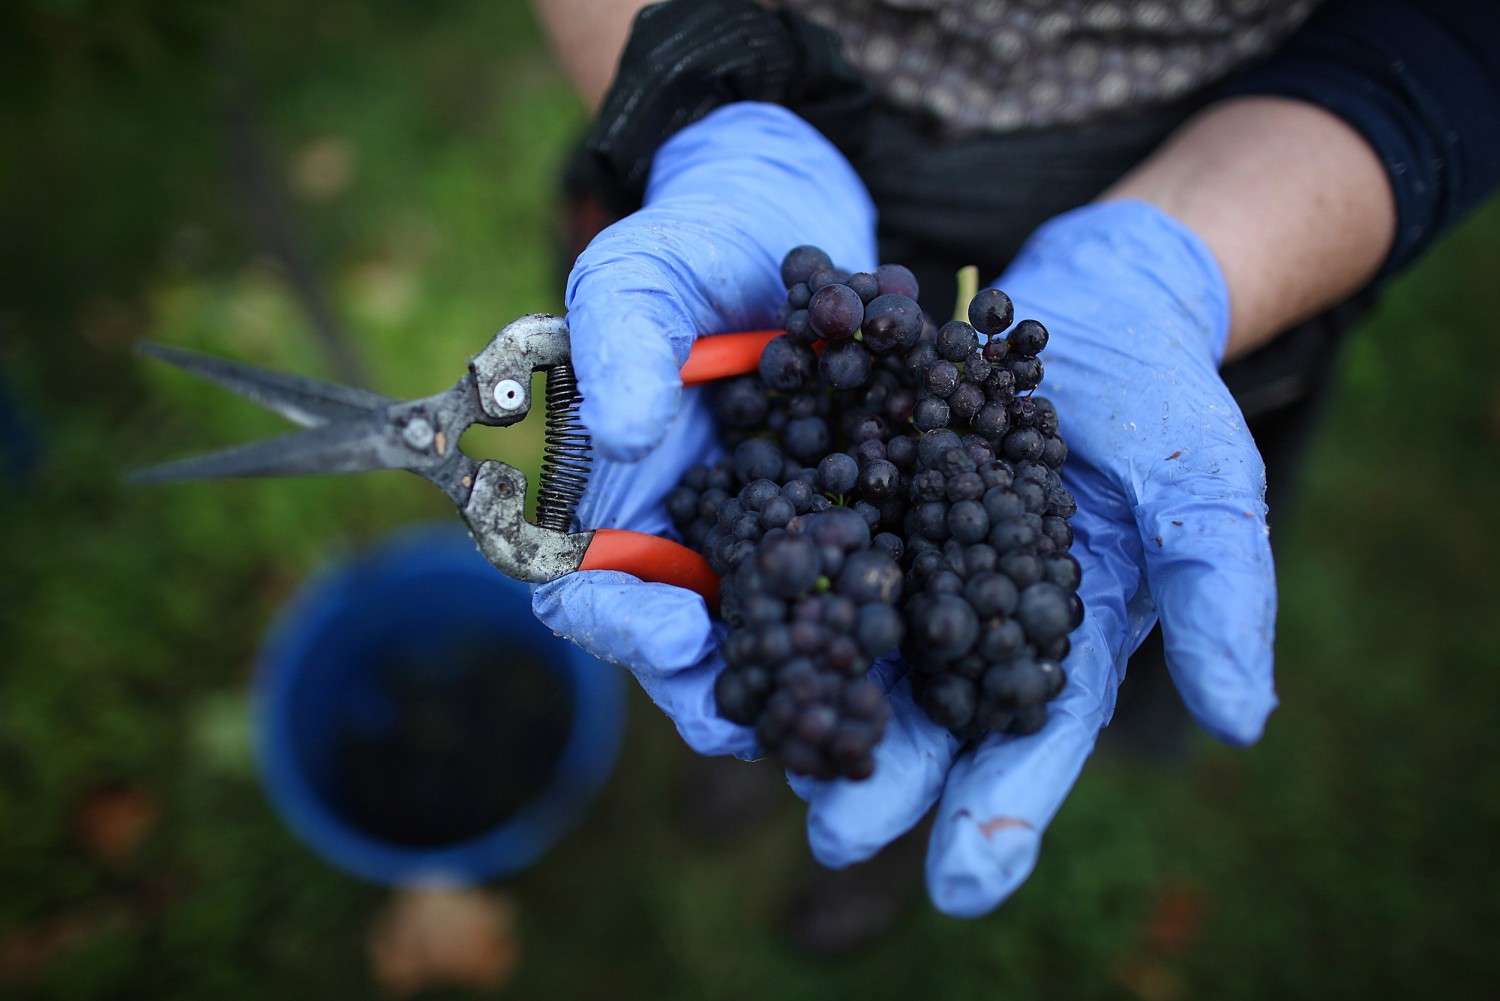 New Varieties Transform Spring Grape Deal - Produce Business